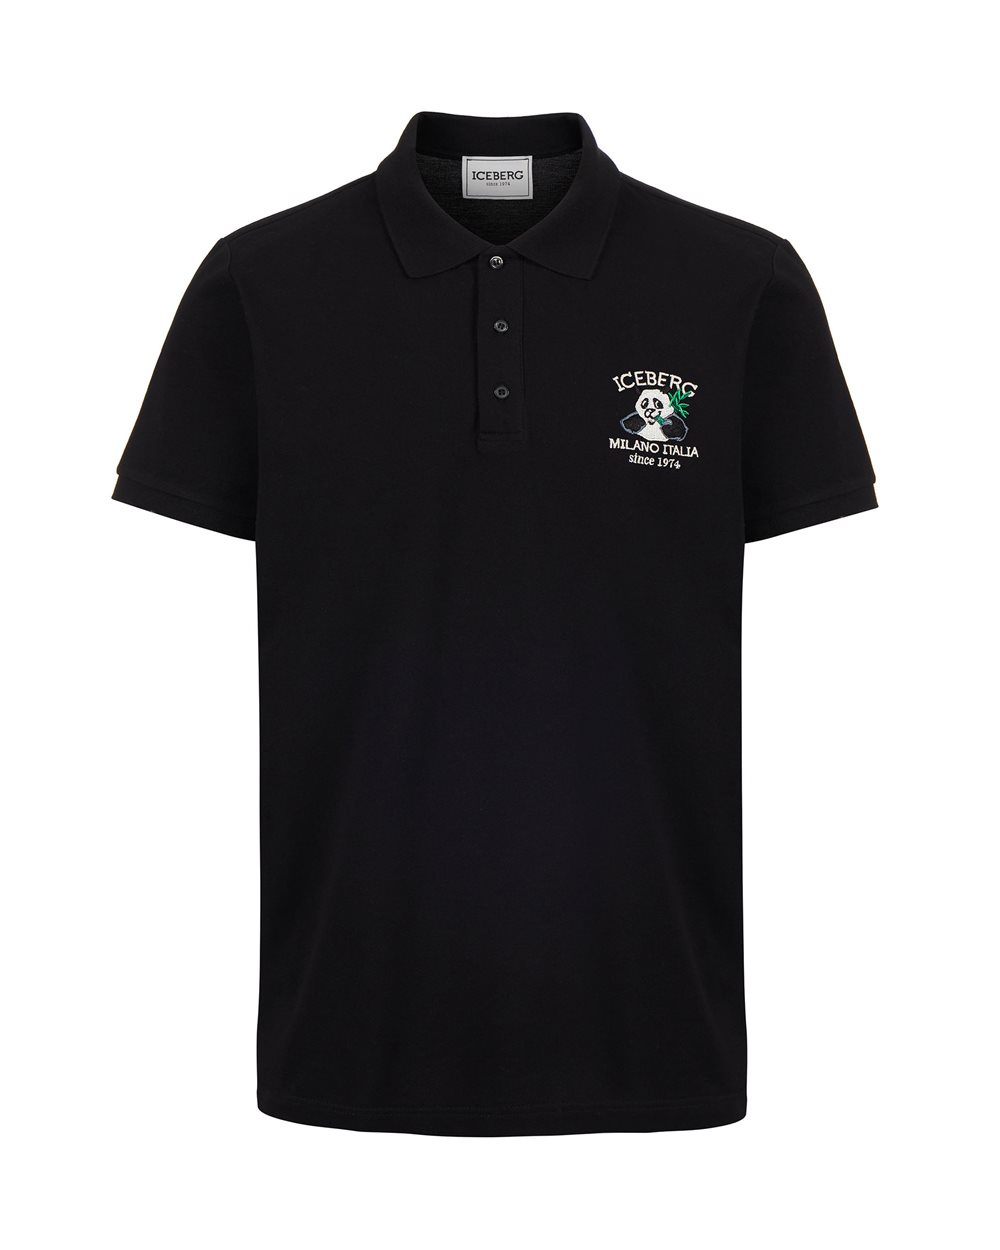 Polo shirt with cartoon graphics and logo - ICEBERG MILANO | Iceberg - Official Website